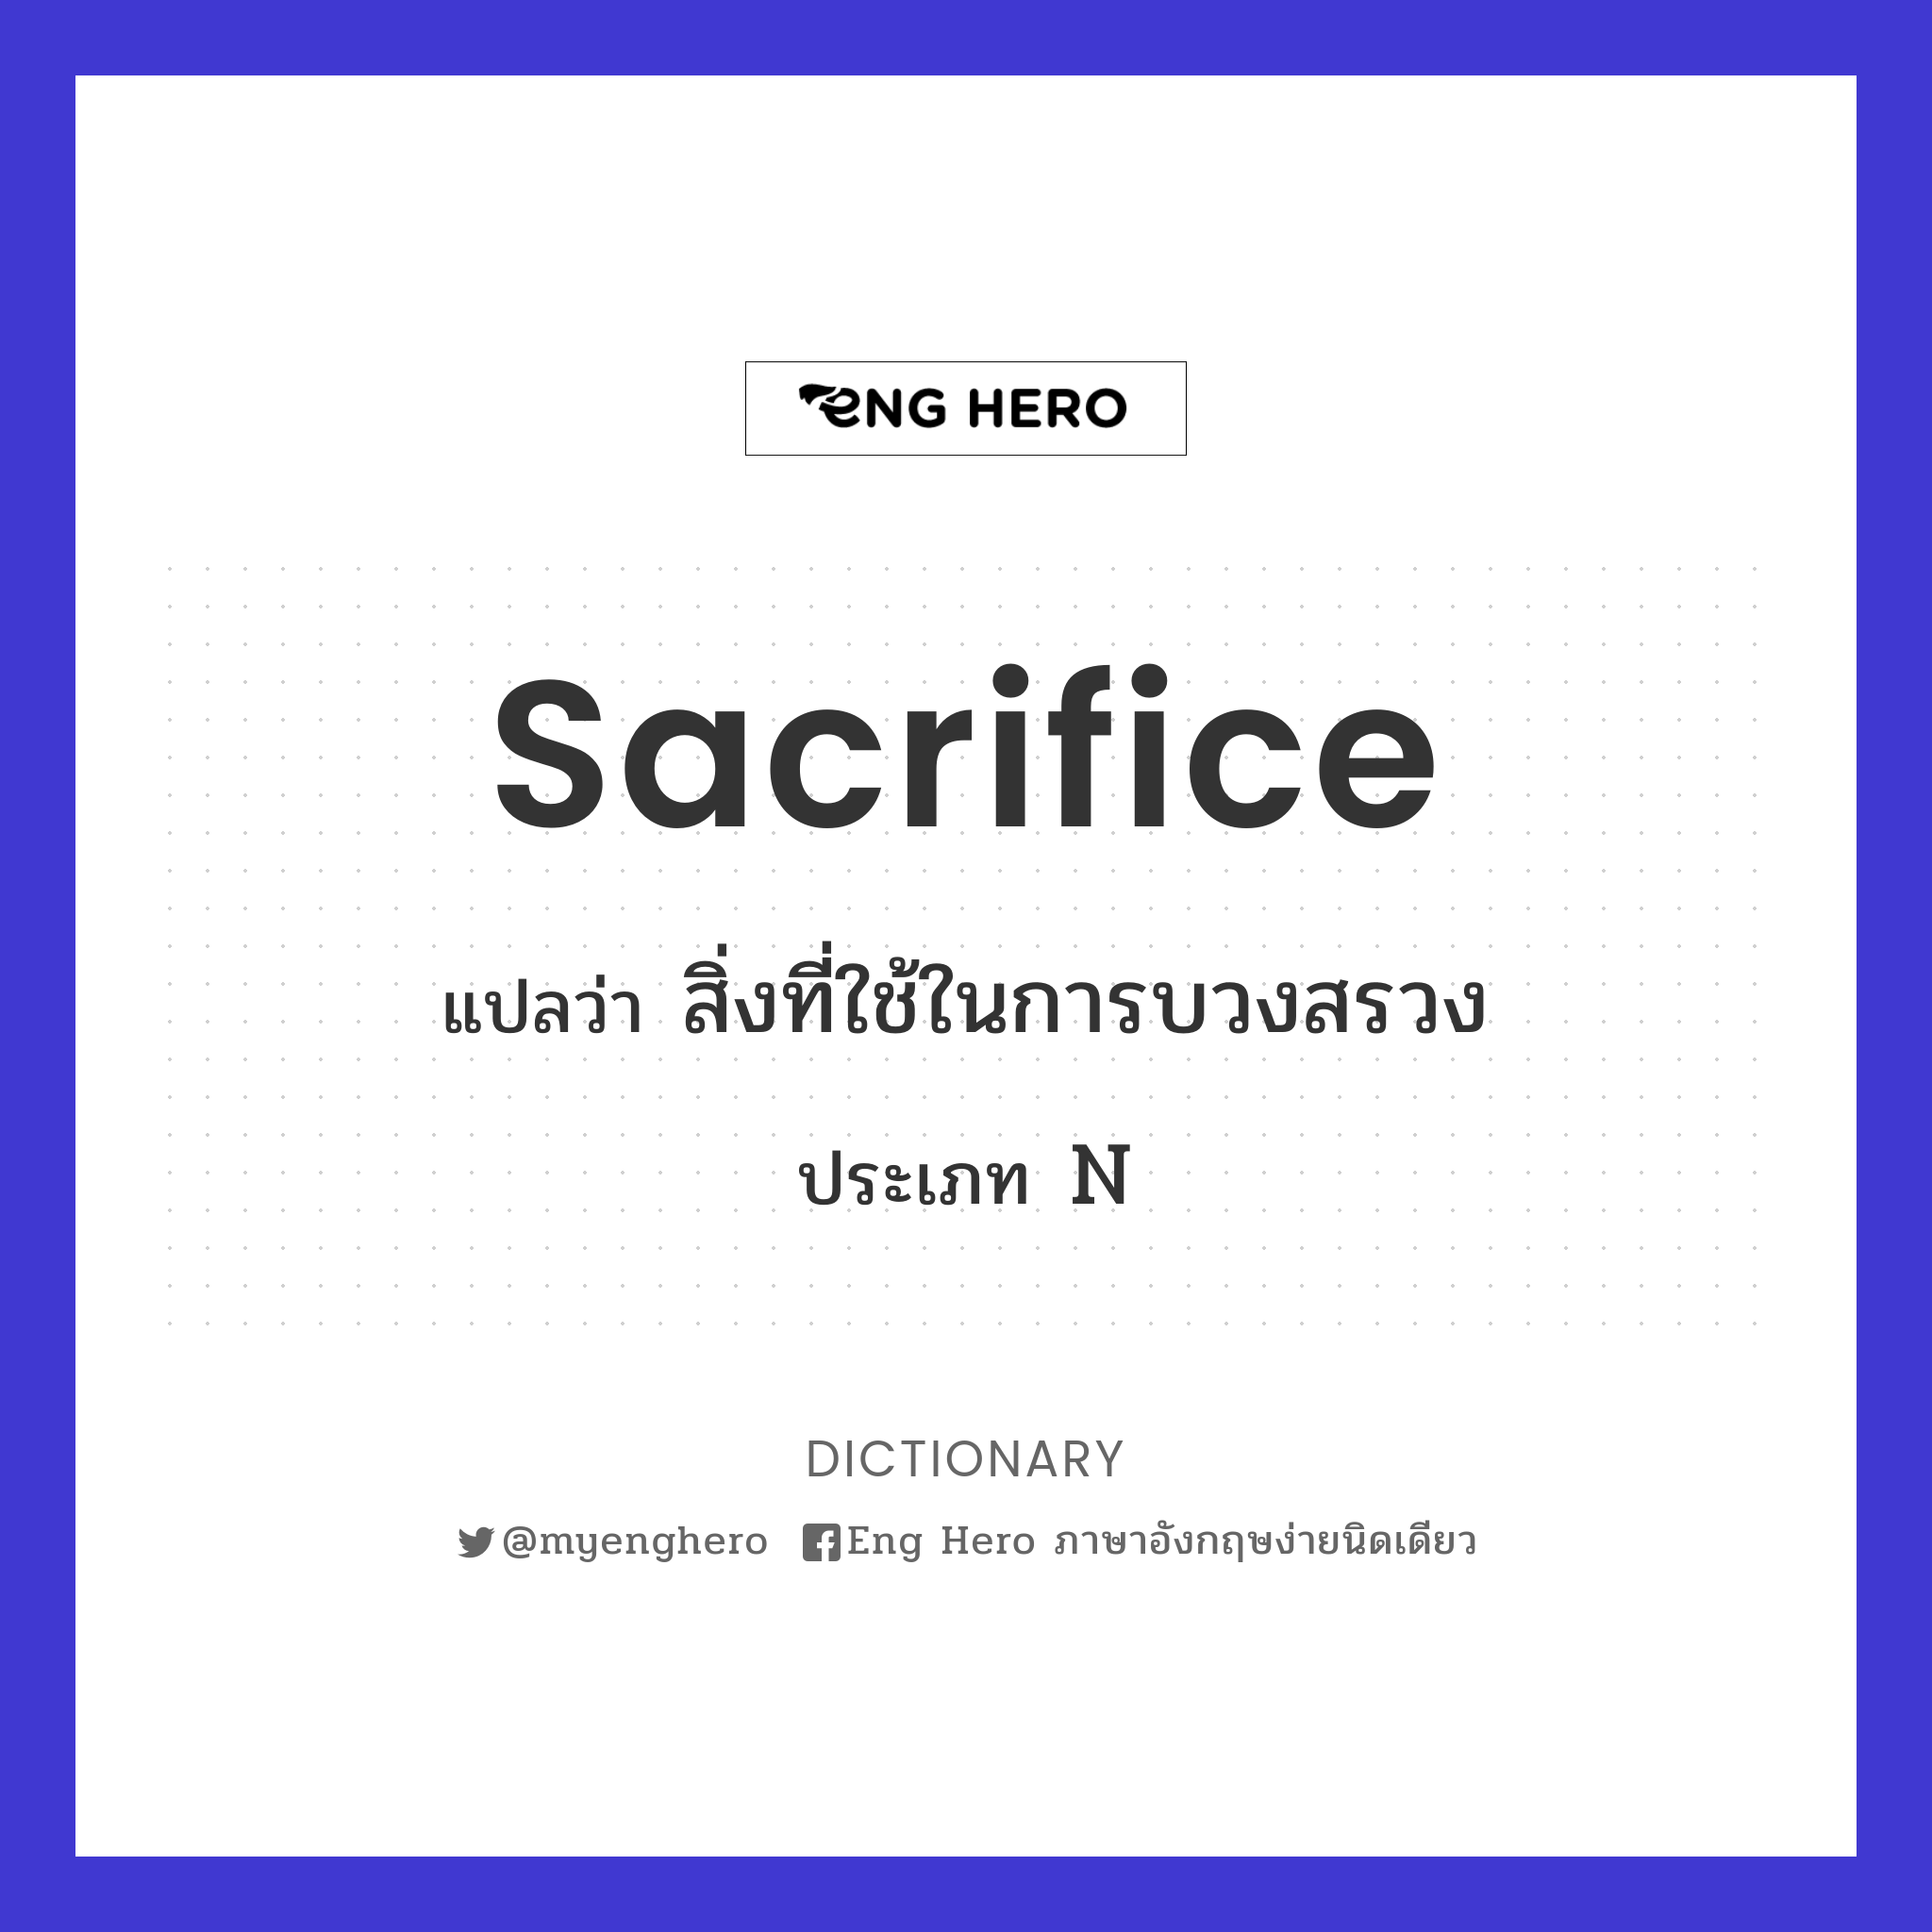 sacrifice